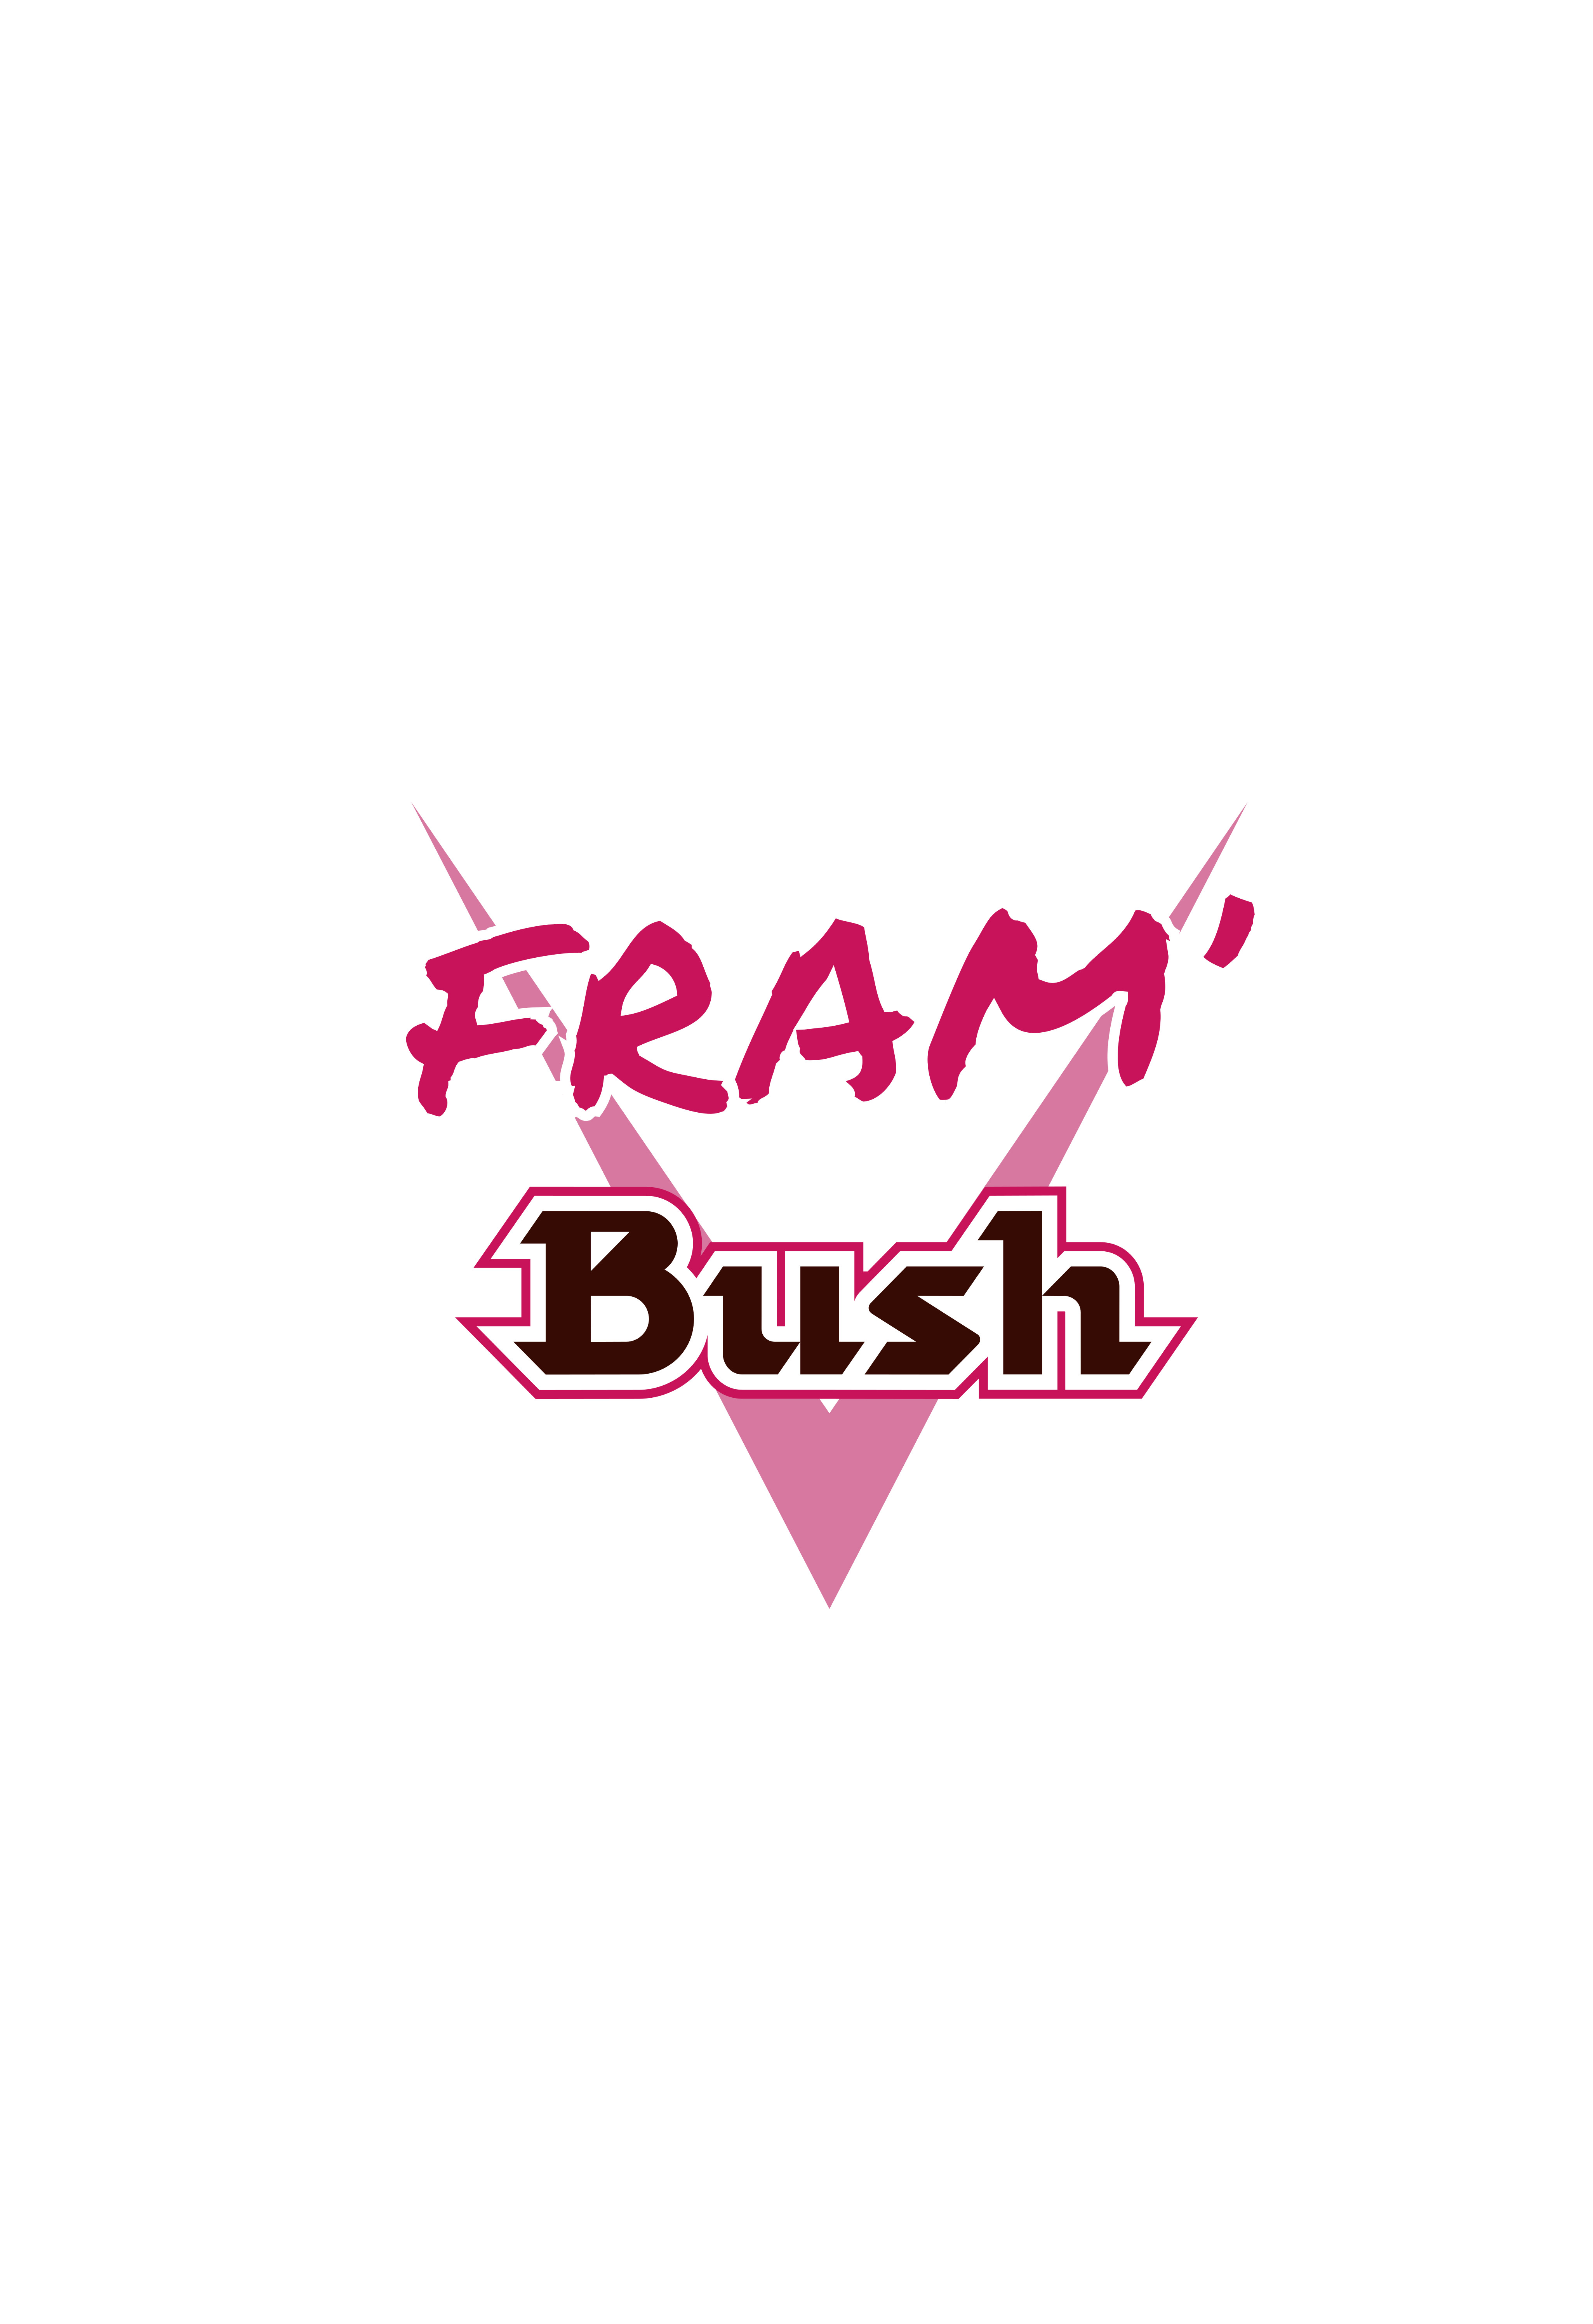 FramBush Fust 20 ltr 8,5%